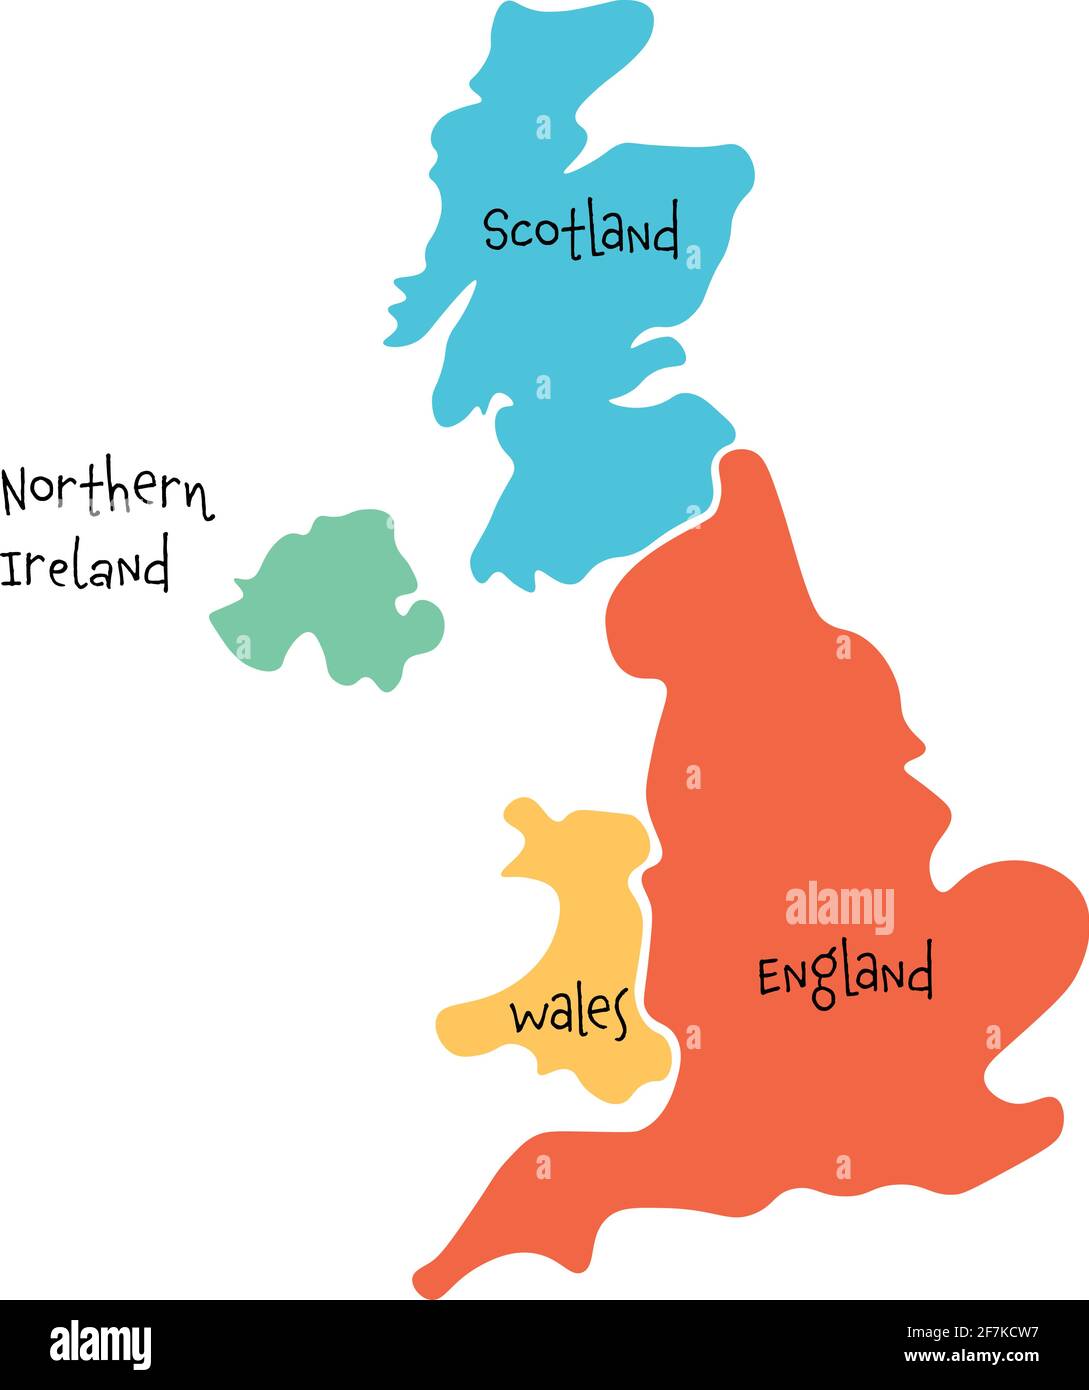 England ireland scotland wales map Immagini Vettoriali Stock - Alamy